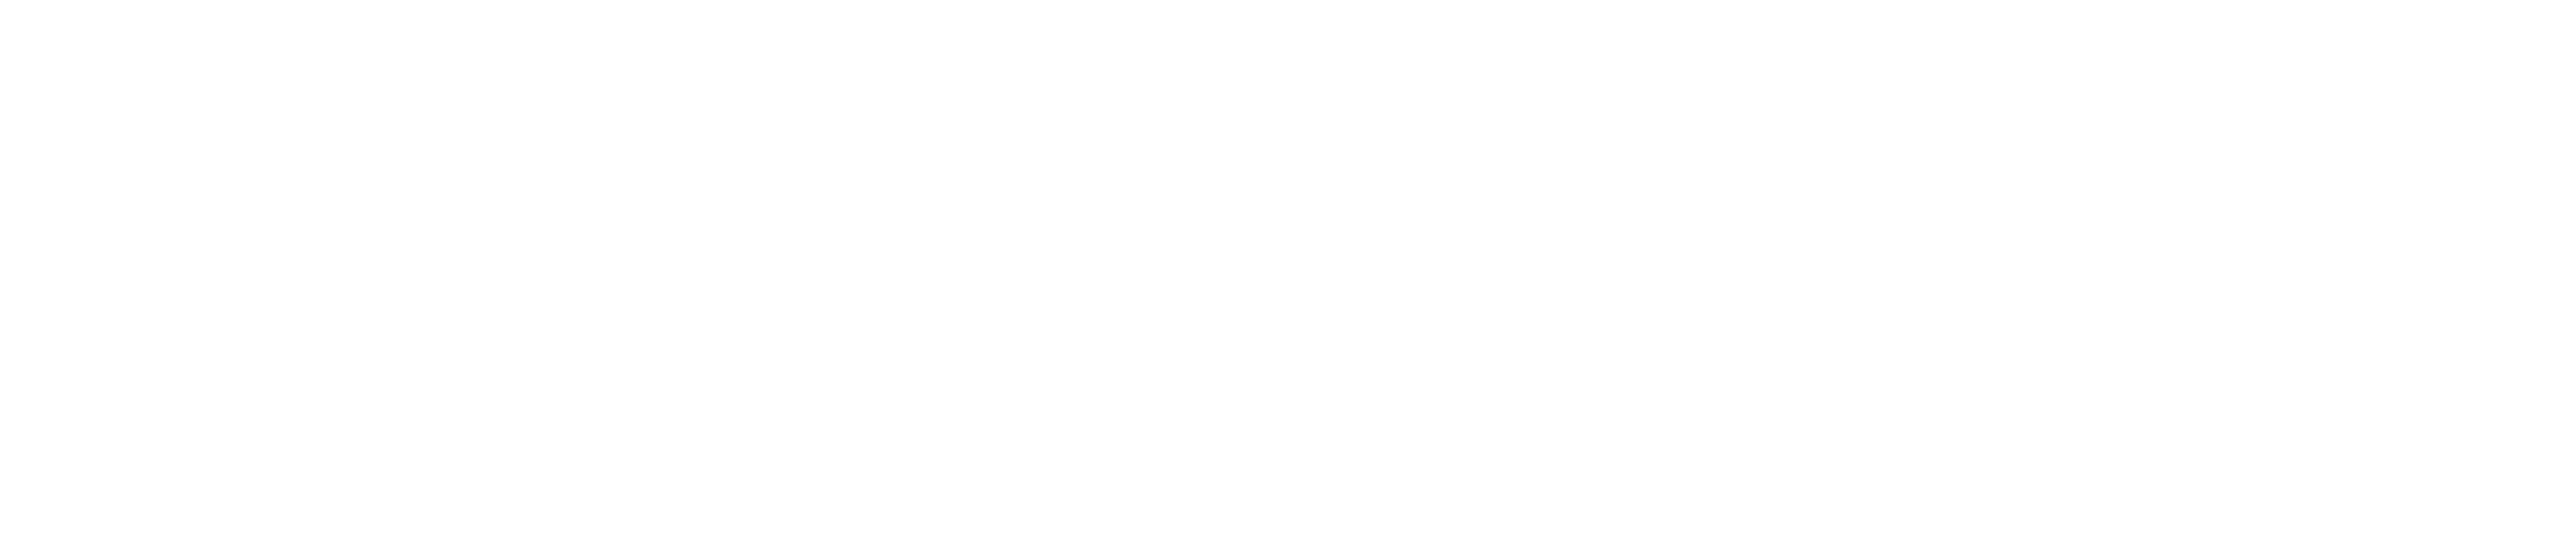 Myota logo